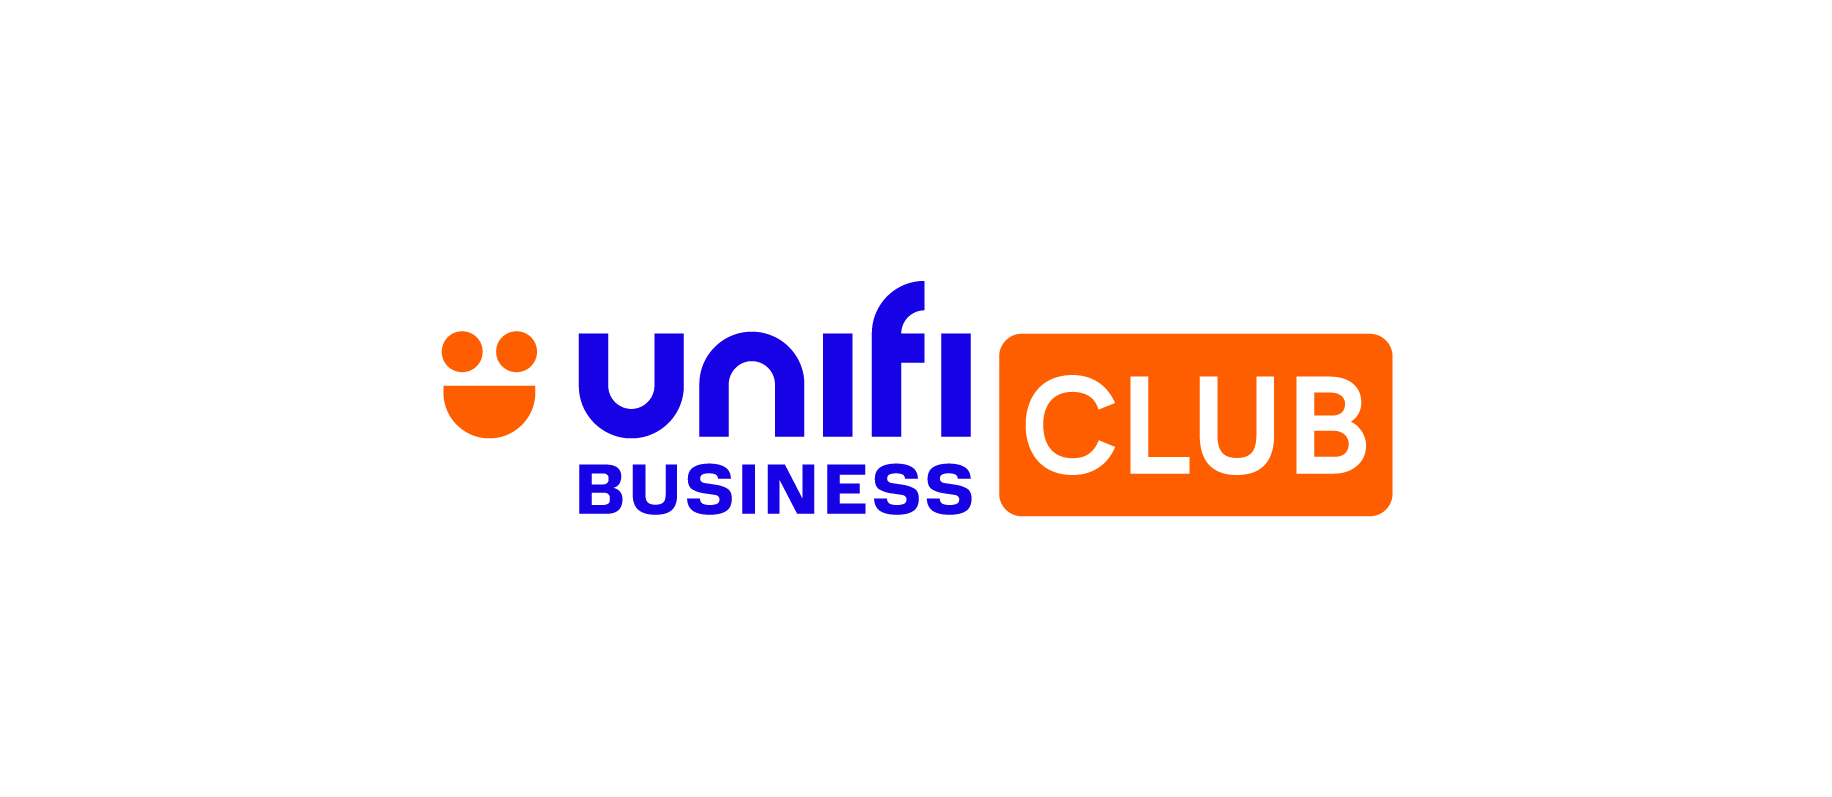 ubc logo